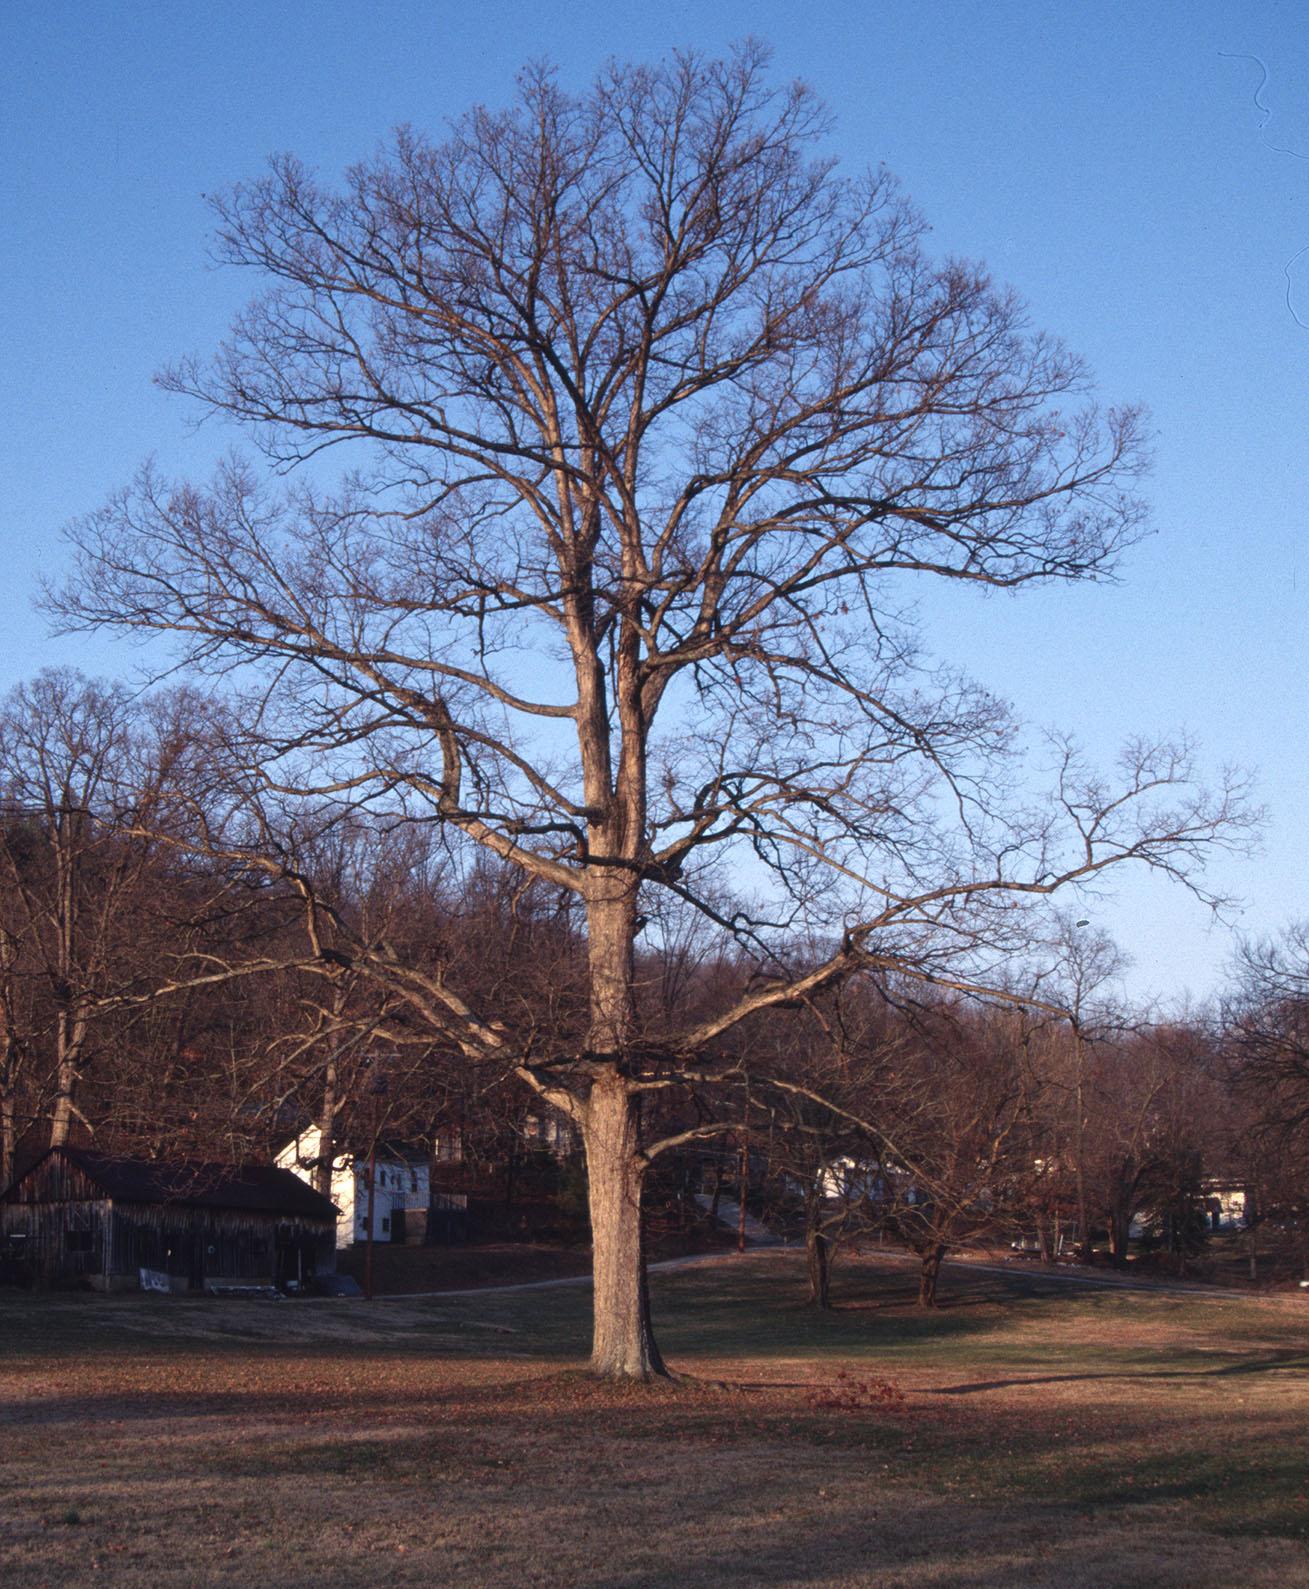 Quercus alba - White Oak